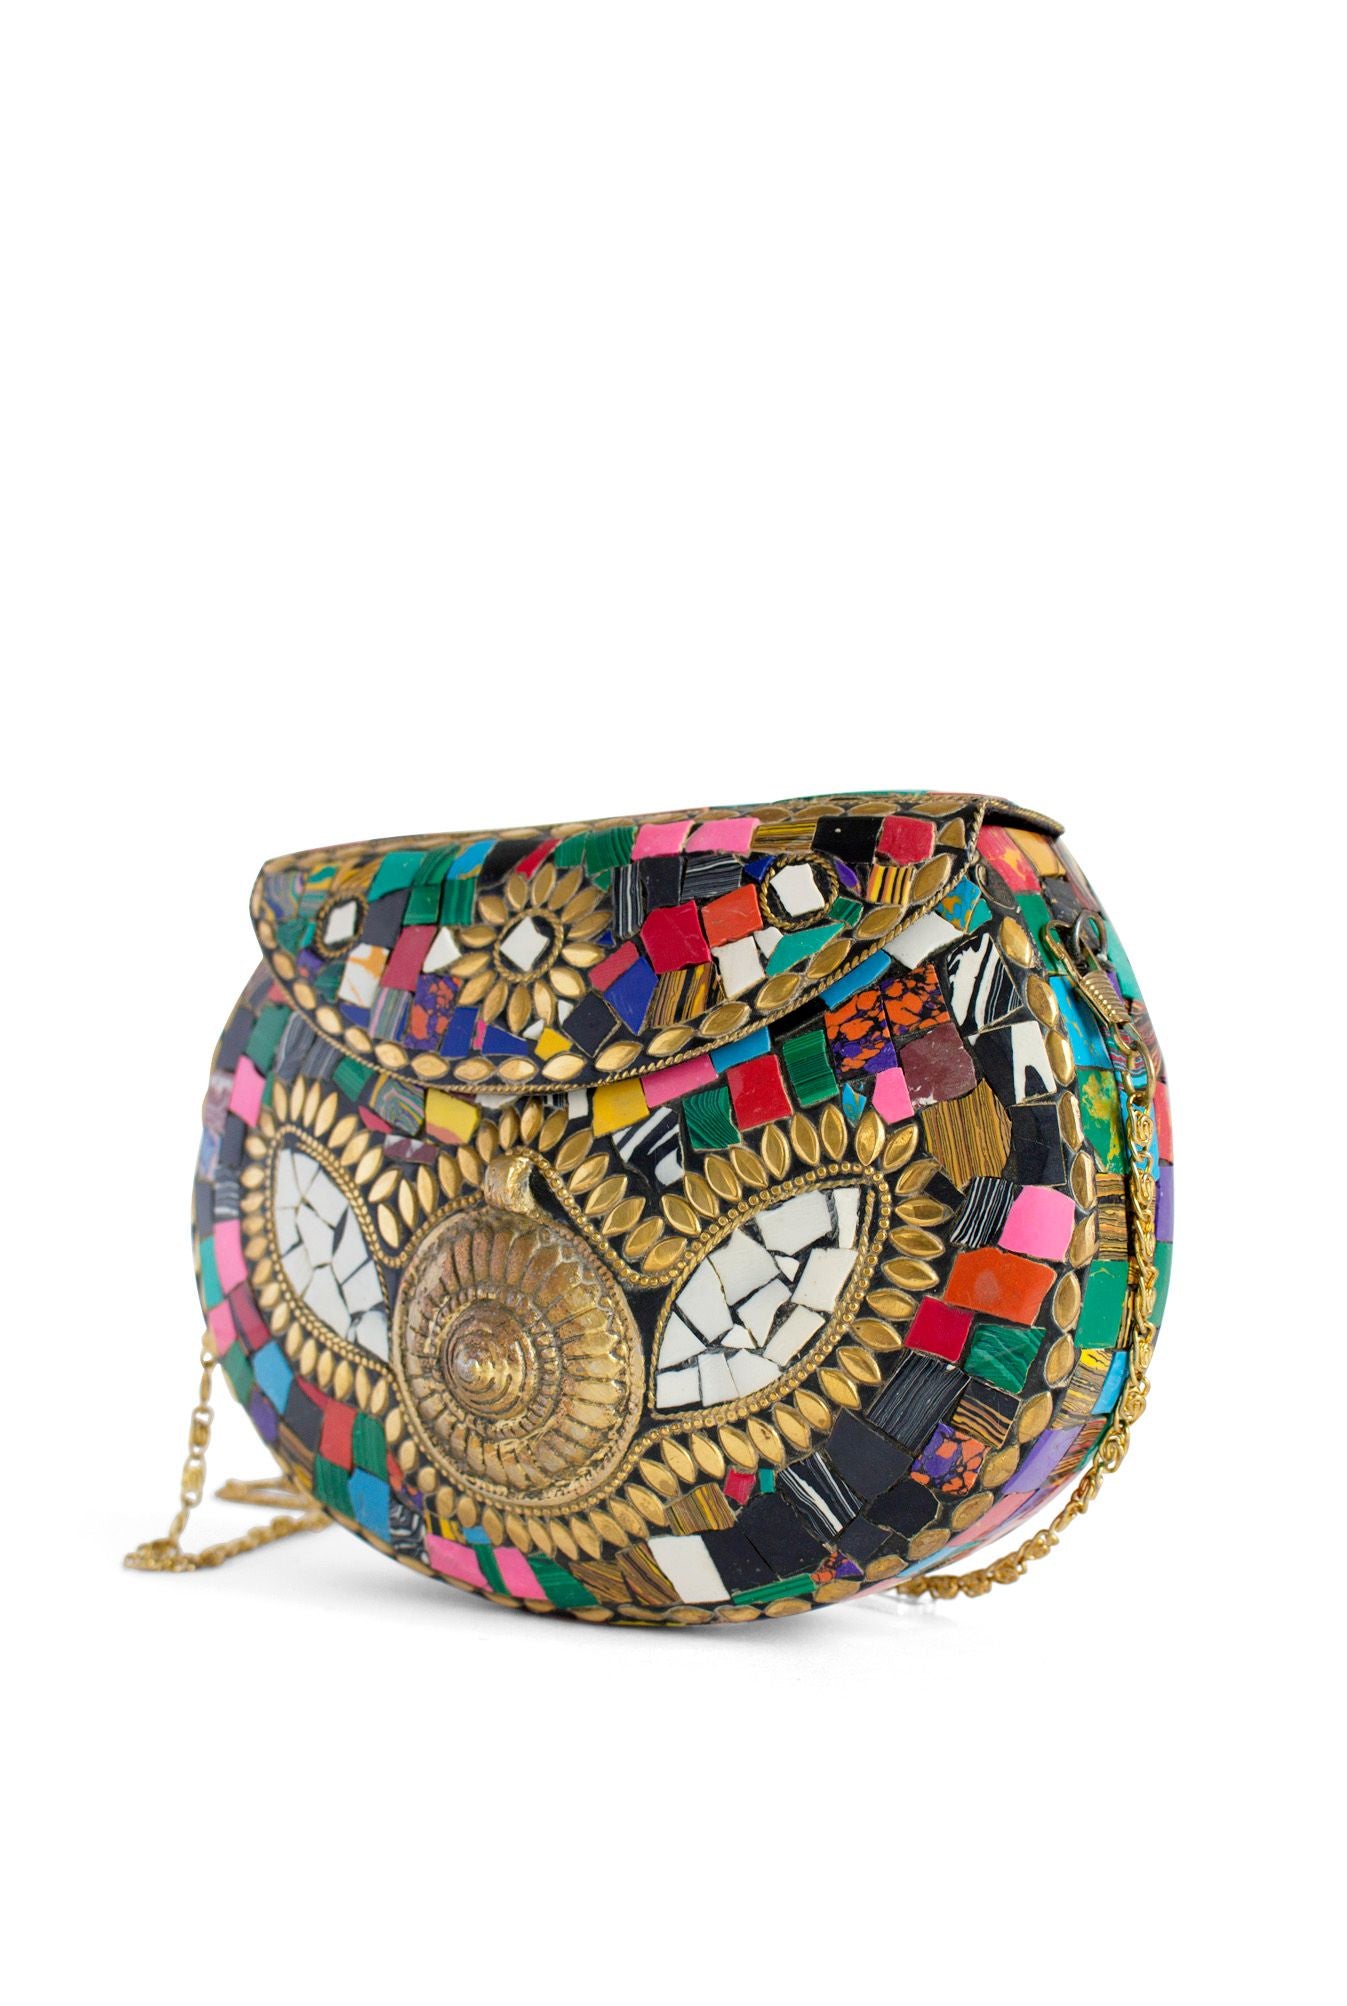 Women Antique Vintage Multi Colored Metal Mosaic Clutch Evening Bag  Handcrafted Stone handbag Purse Made in India (Multi): Handbags